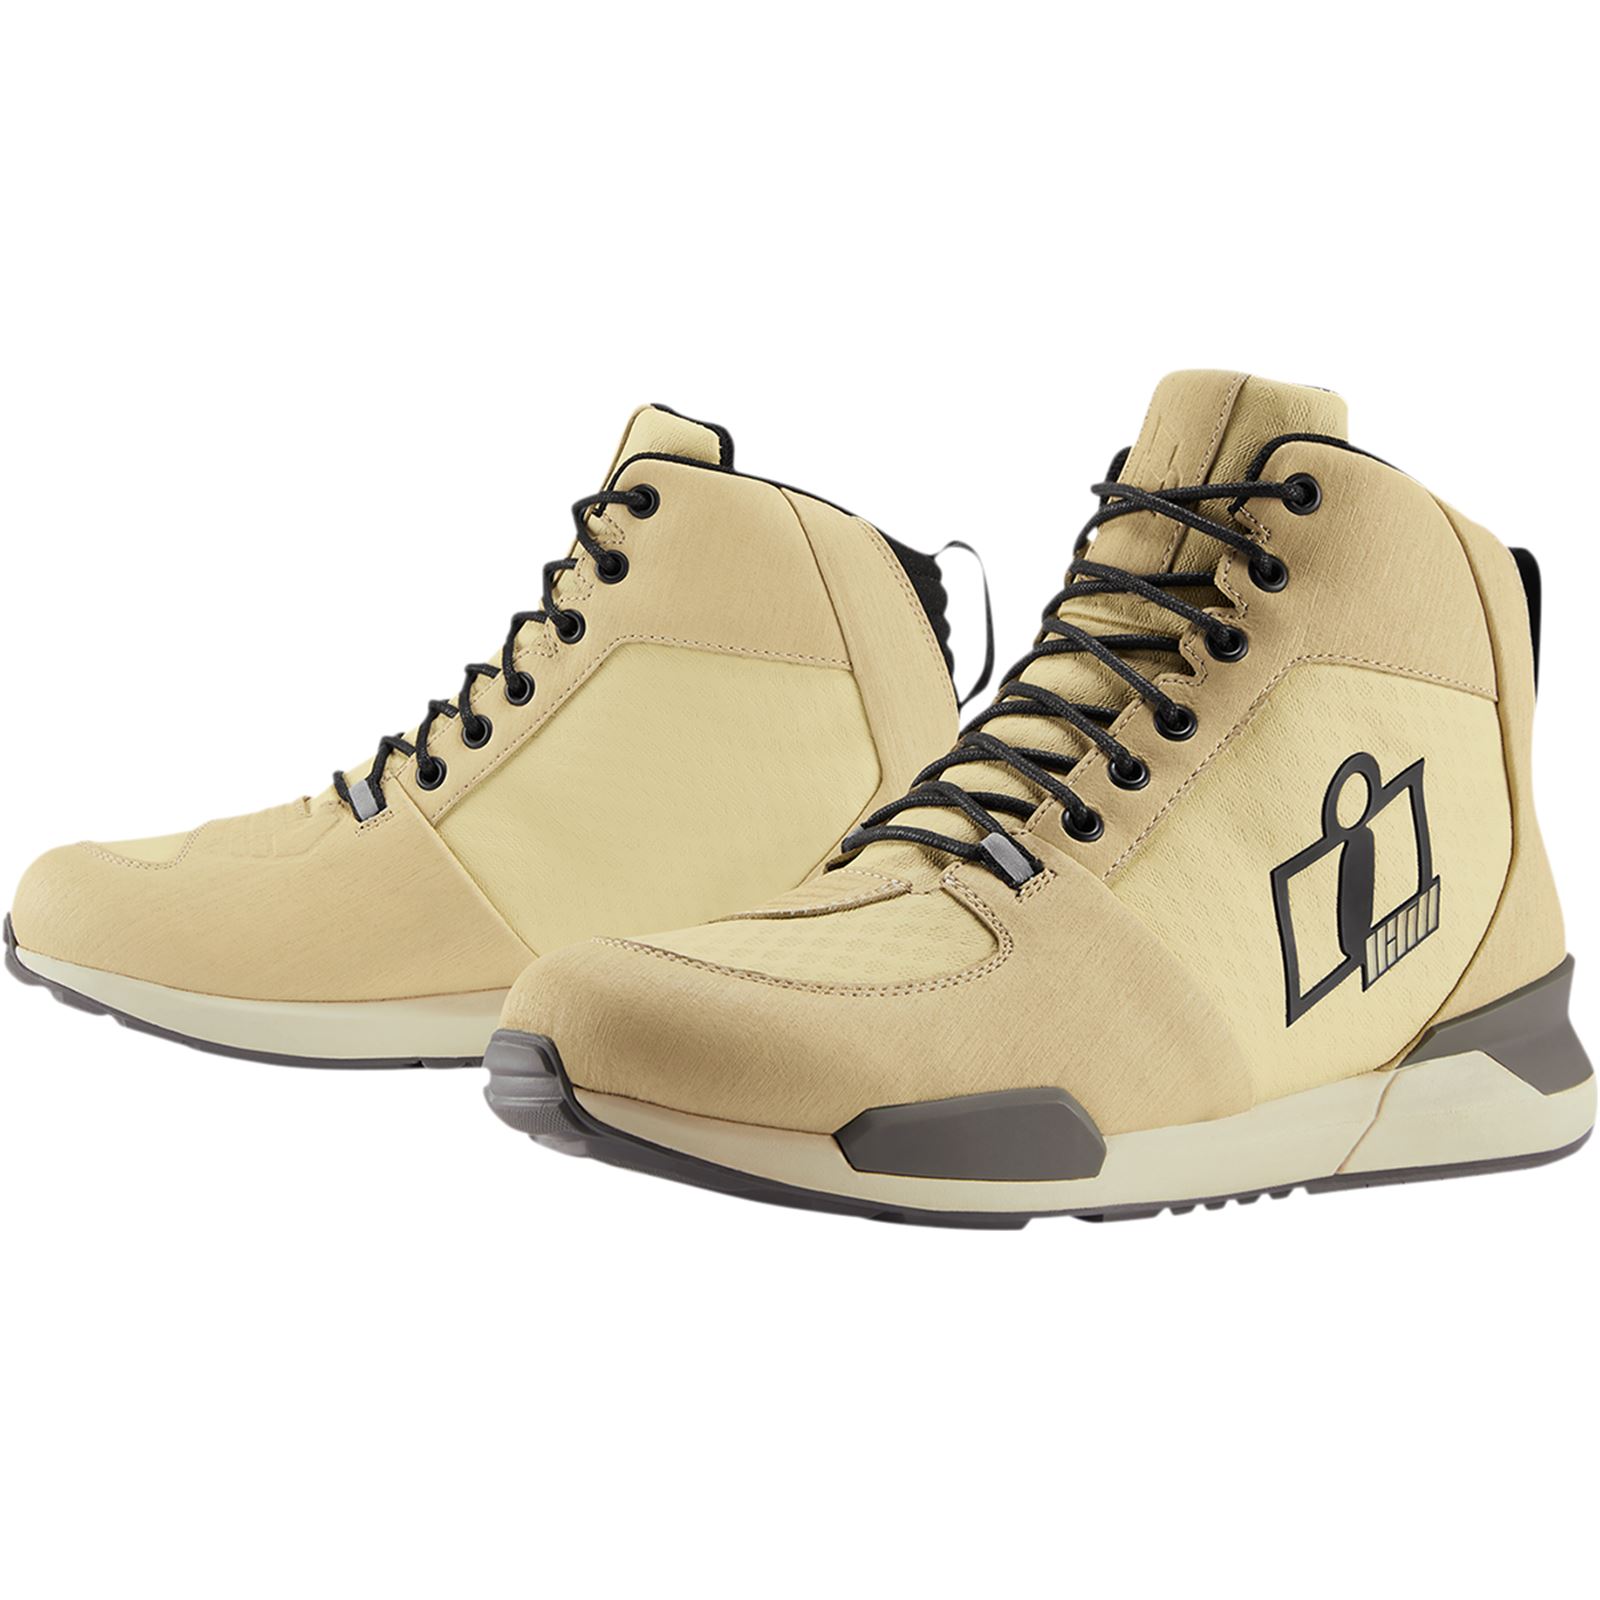 Icon Tarmac Waterproof Boots - Tan - Size 11.5